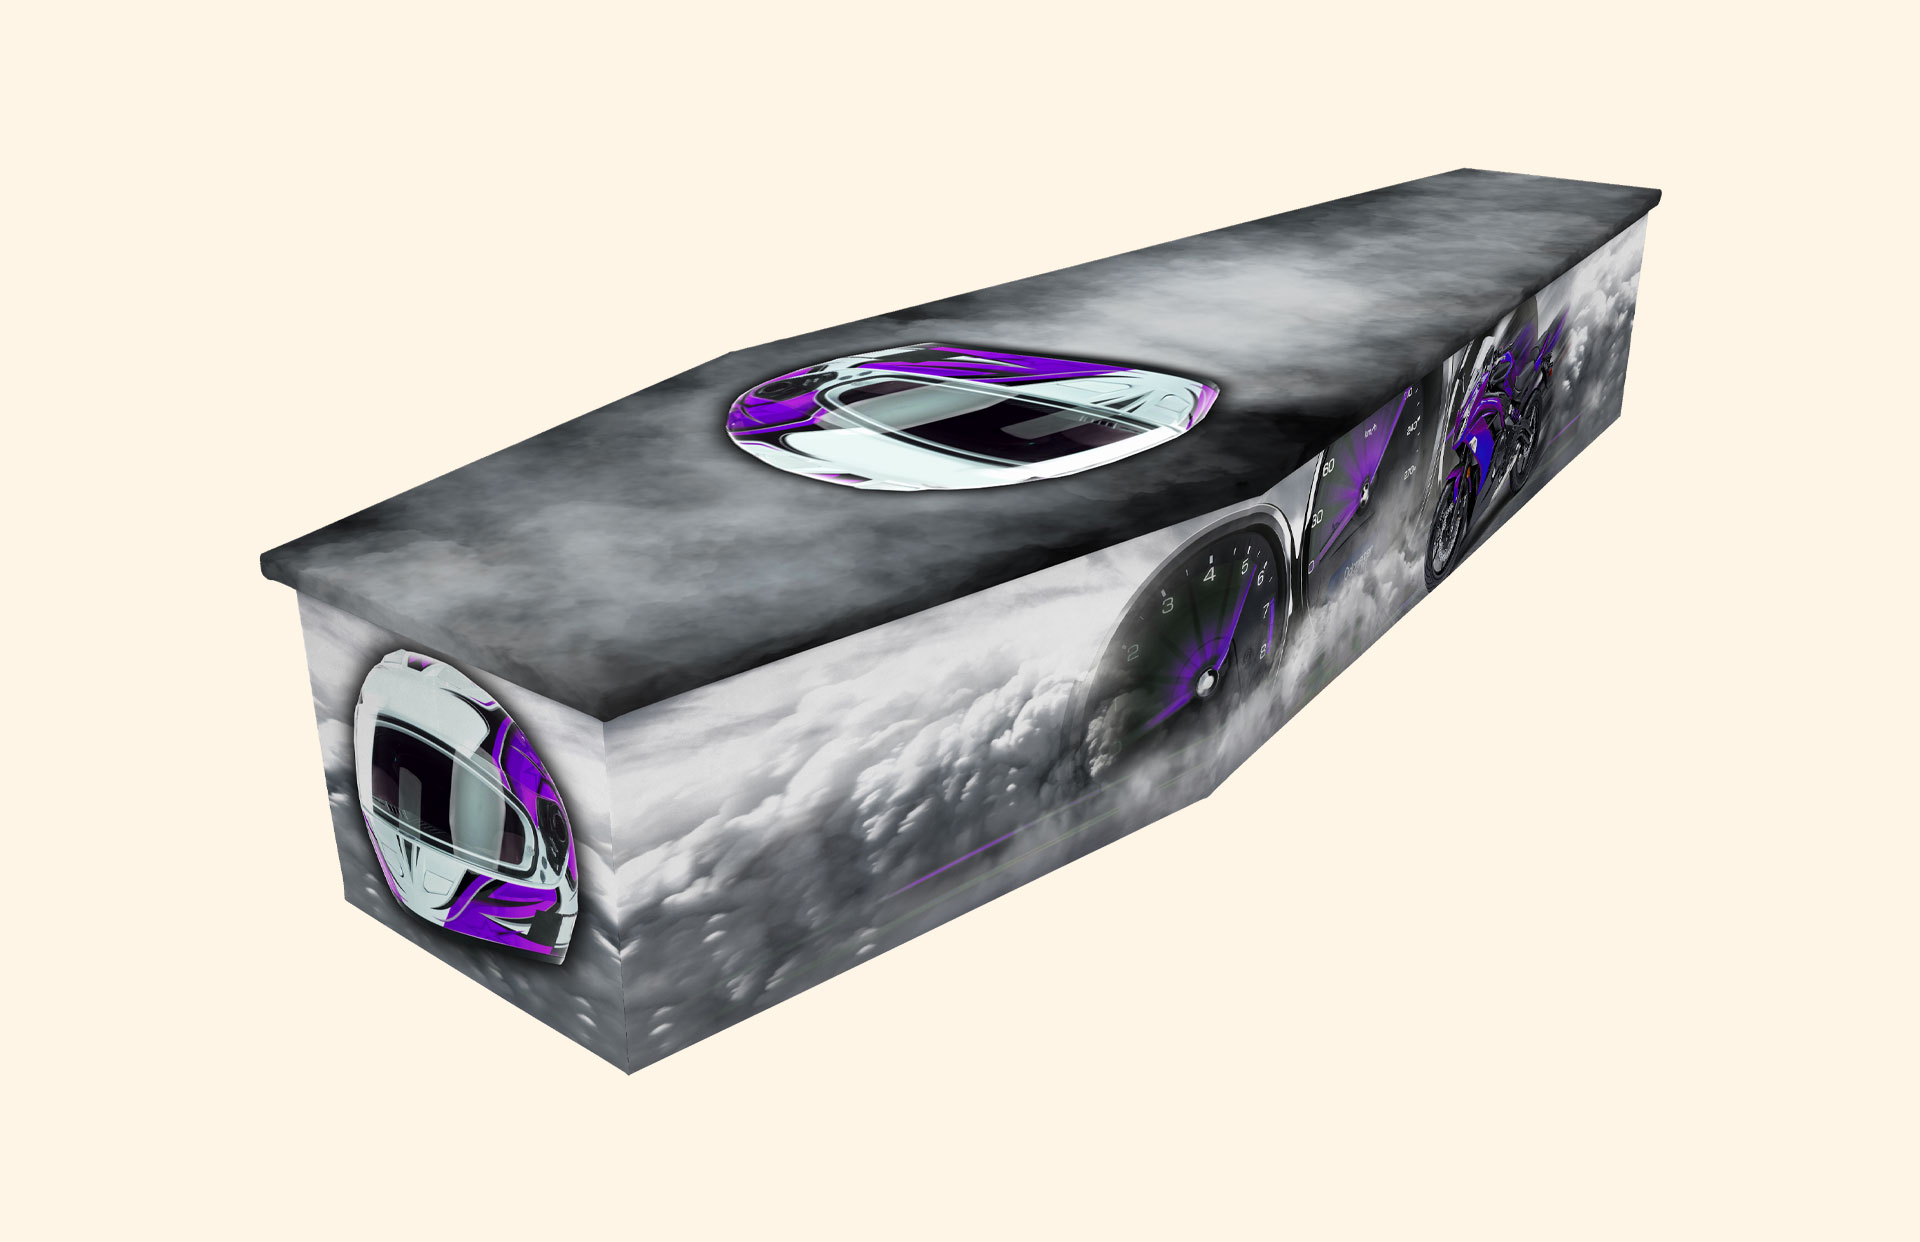 Neon Speed purple design on a cardboard coffin